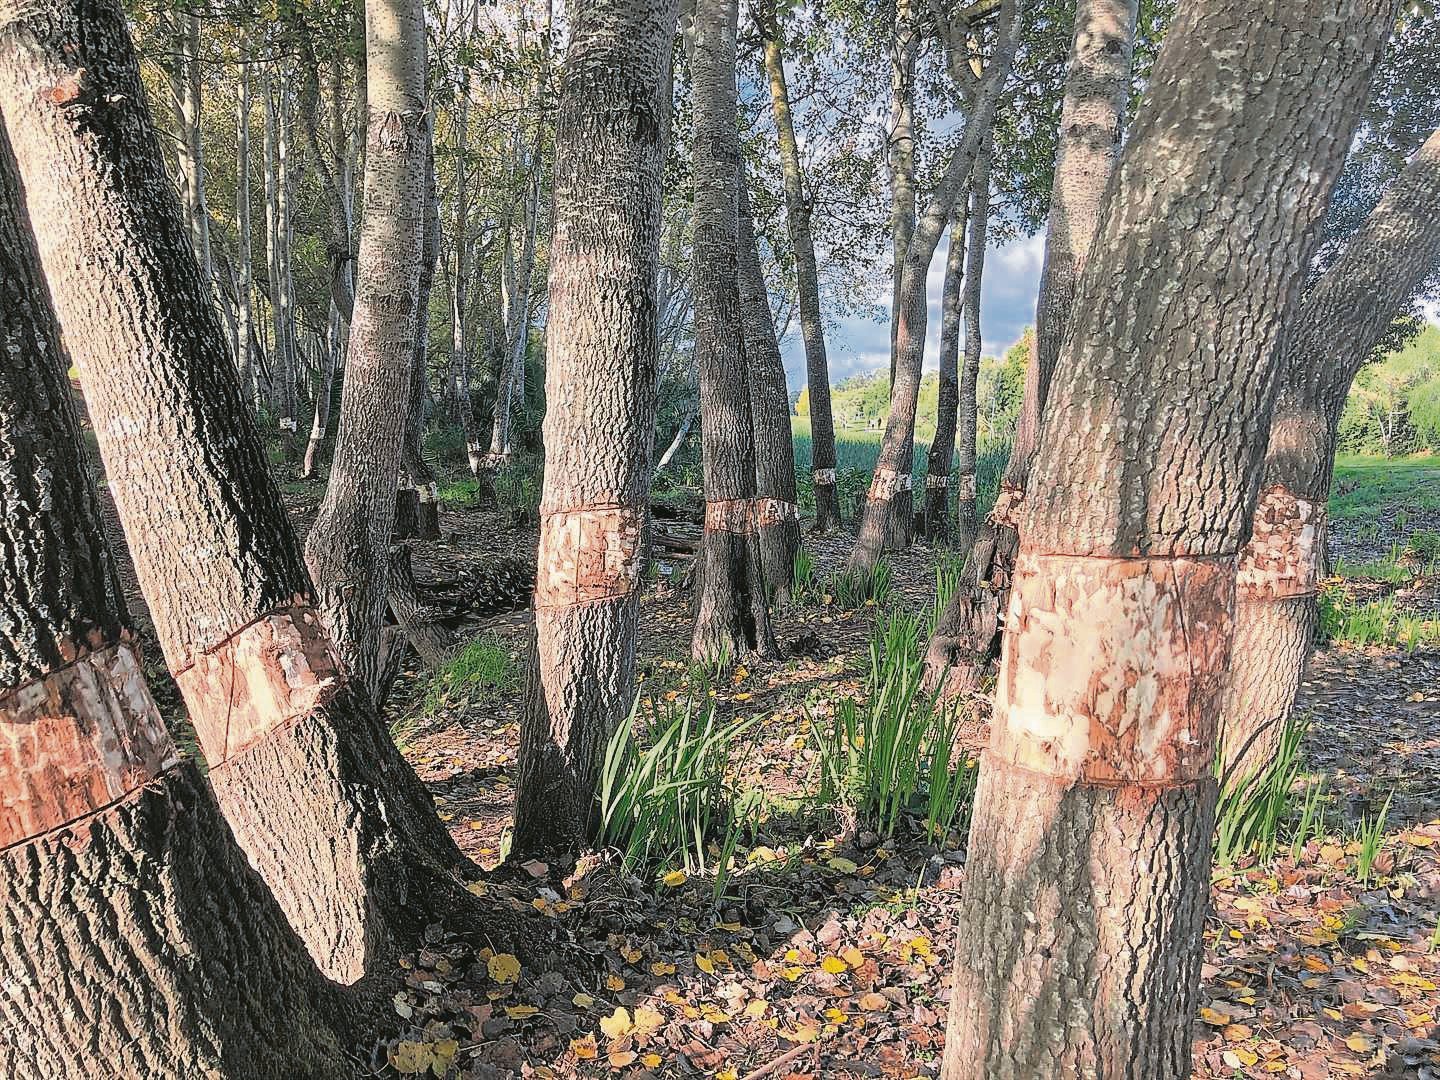 Ringbarked poplar trees in Majik Forest in 2022.FOTO’s: Nielen de Klerk